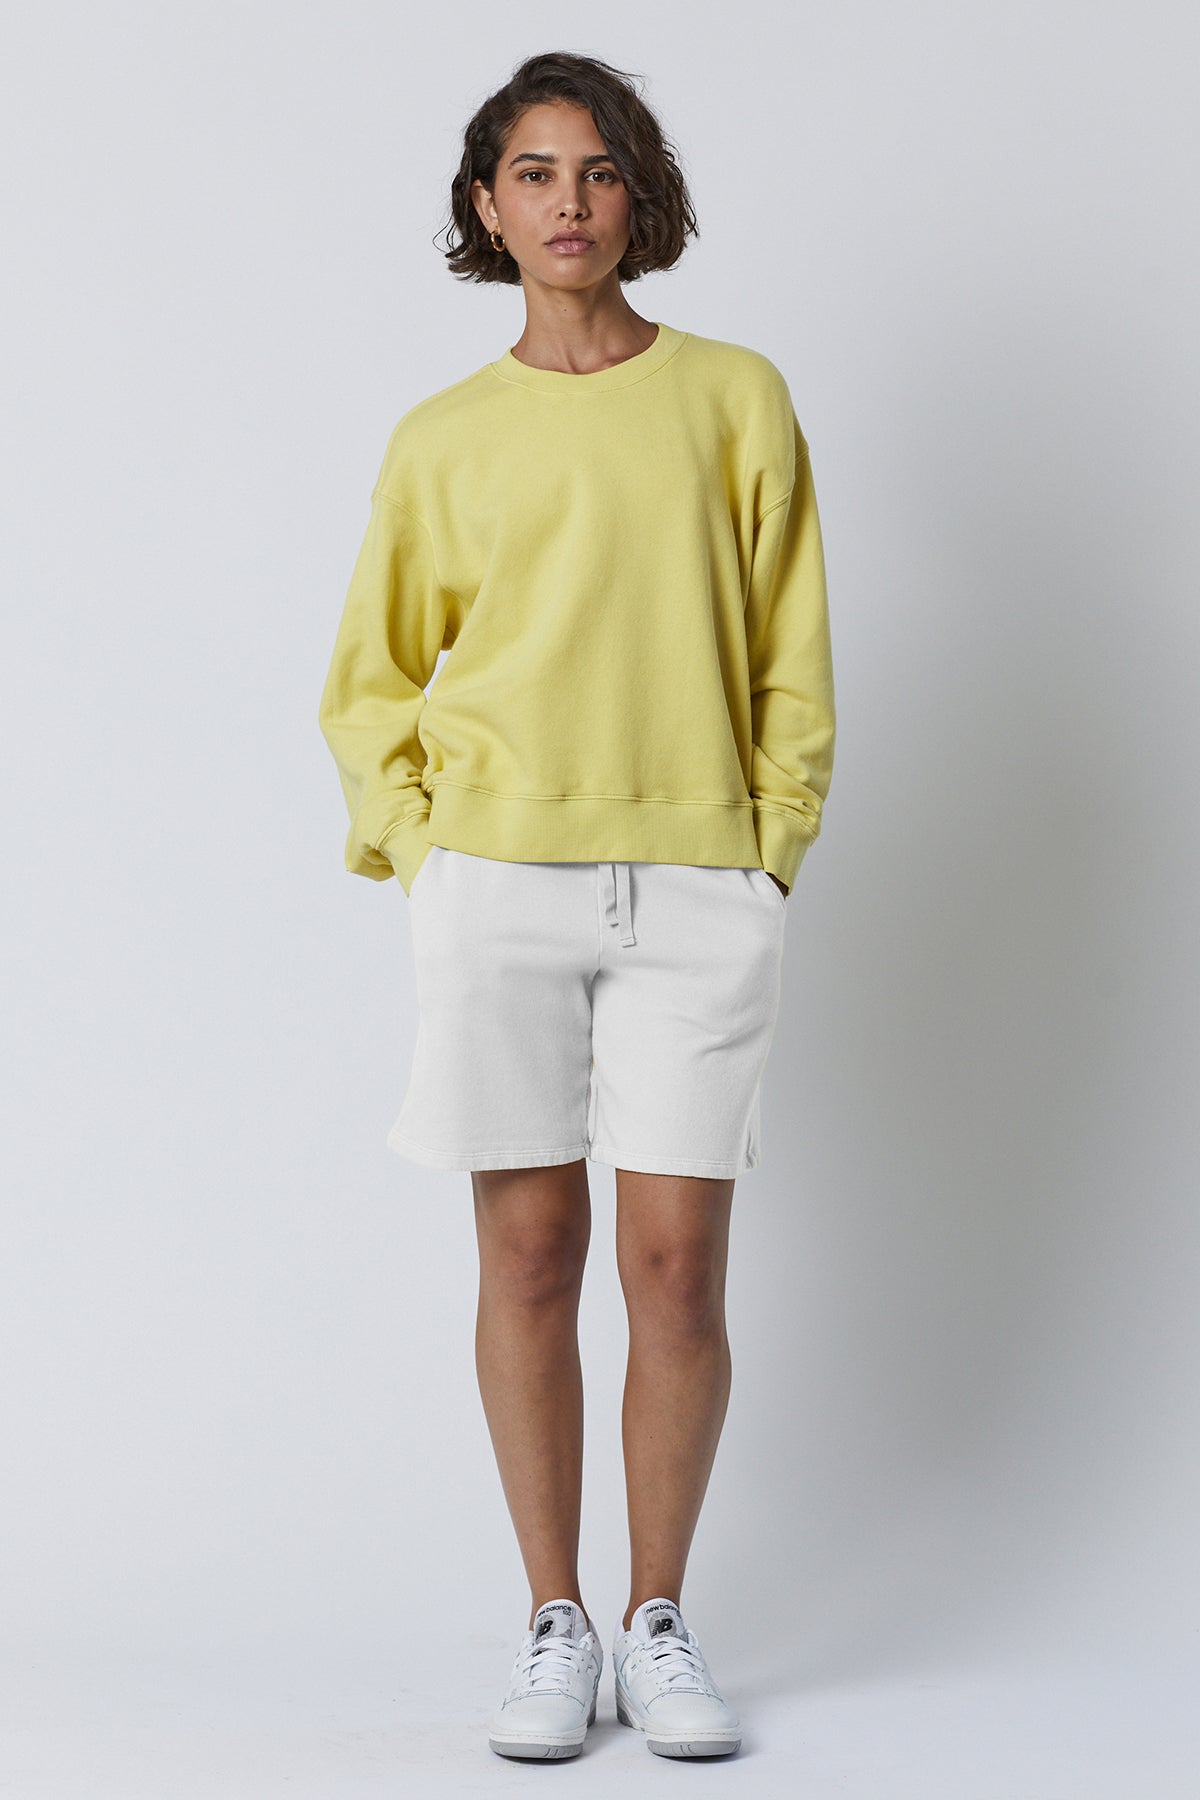   The model is wearing a Velvet by Jenny Graham LAGUNA SWEATSHORT and white shorts. 